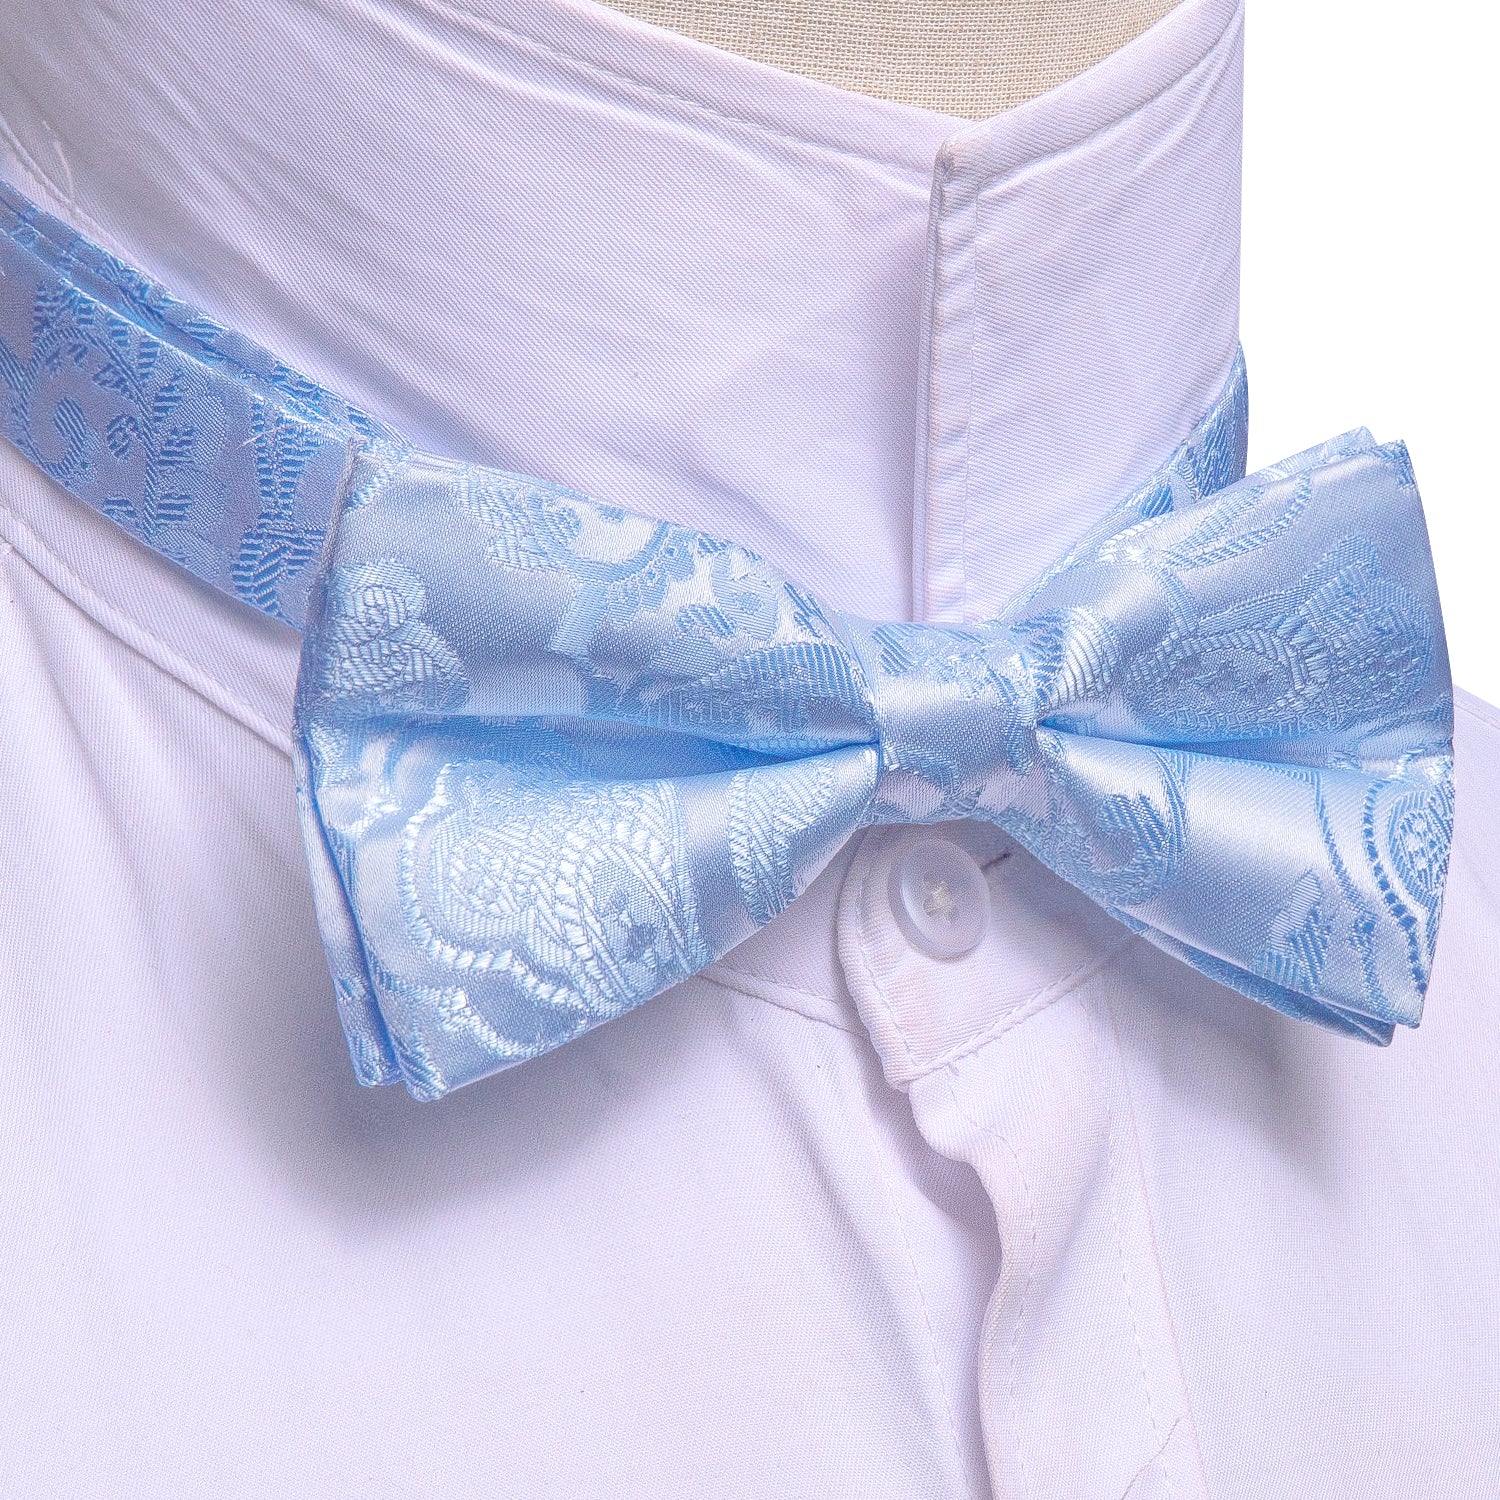 Barry.wang Blue Tie Paisley Silk Pre-Tied Bow Tie Hanky Cufflinks Set